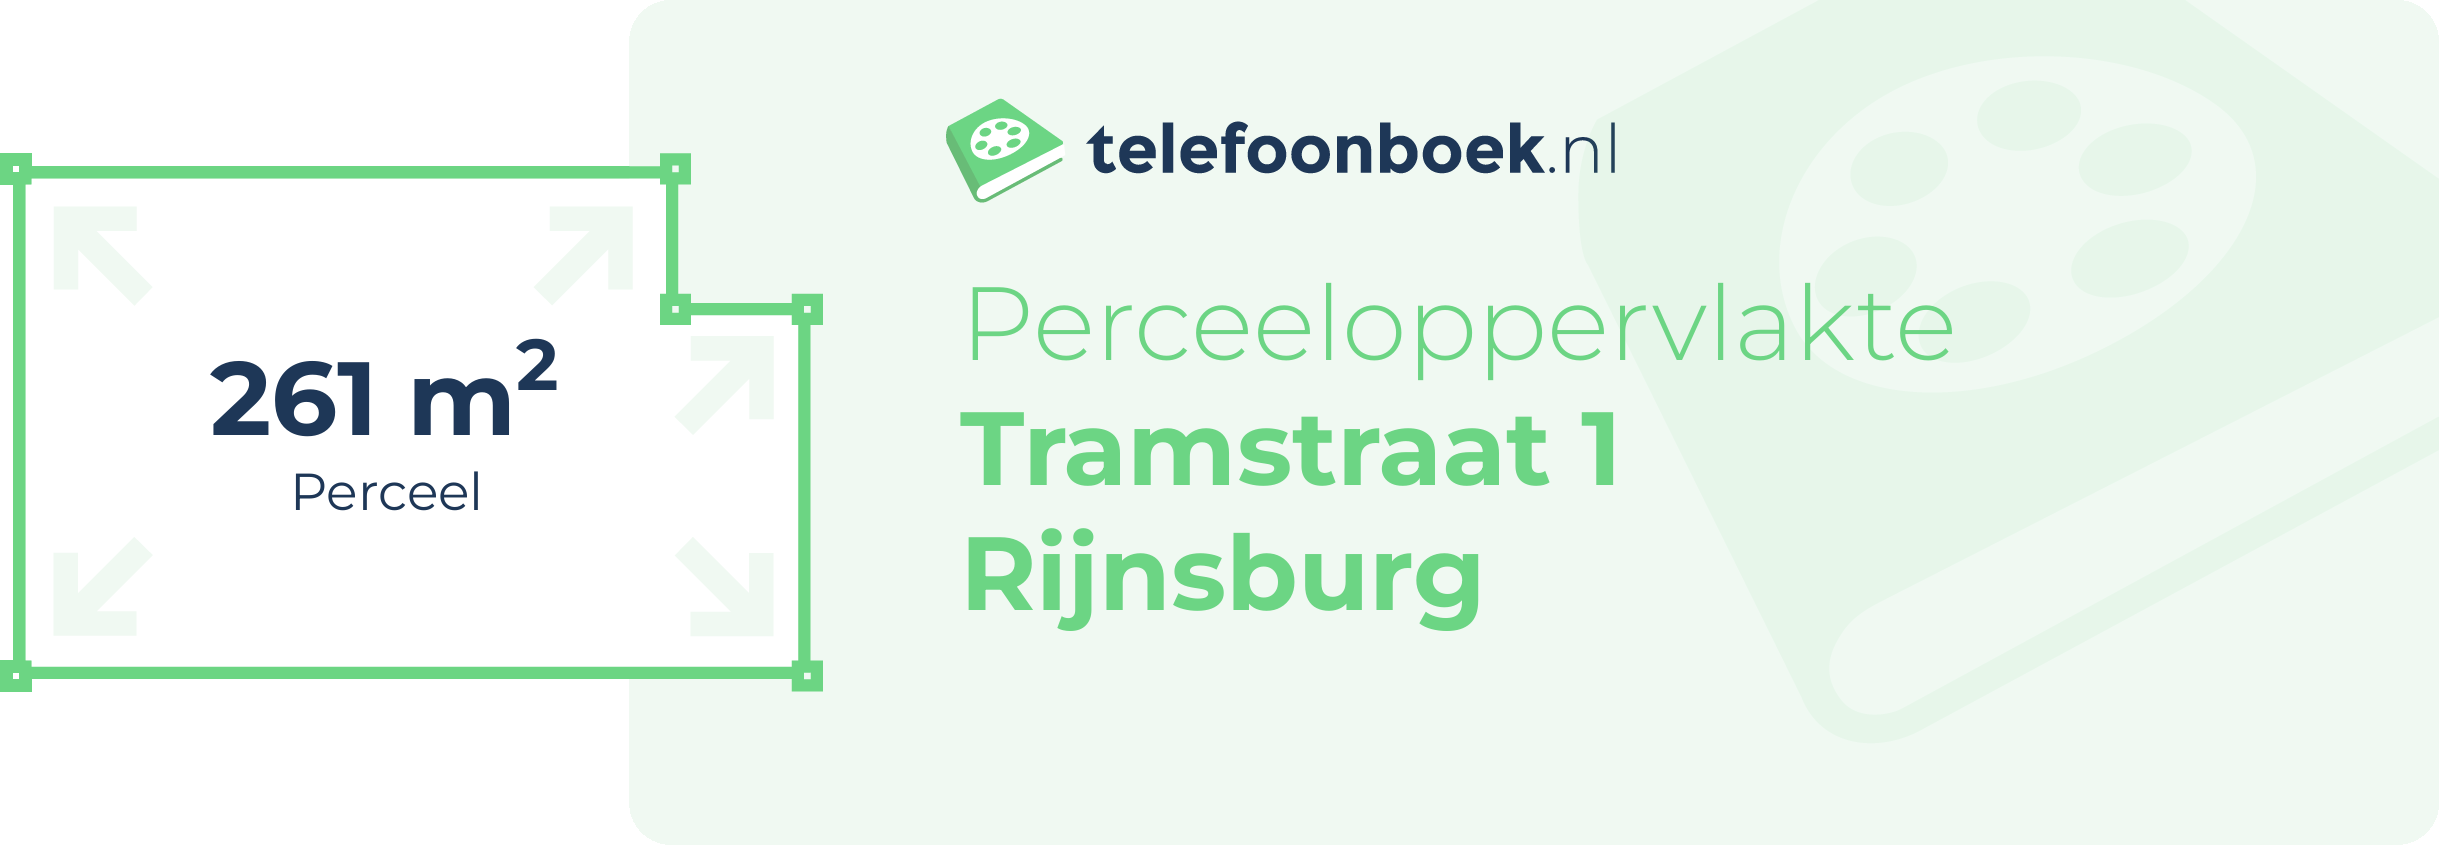 Perceeloppervlakte Tramstraat 1 Rijnsburg